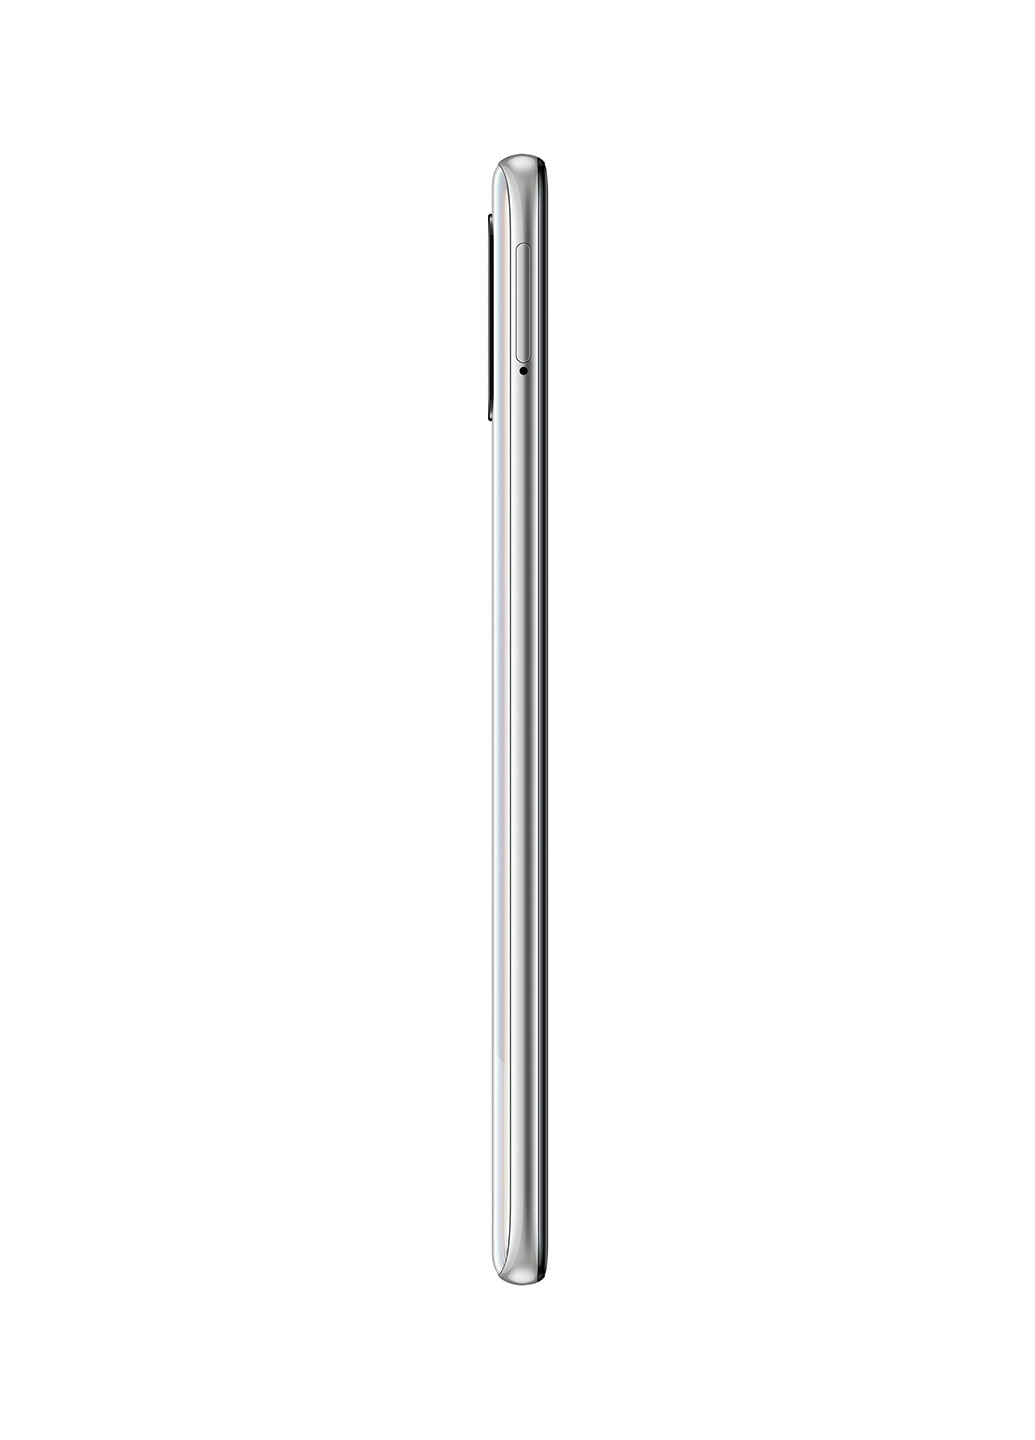 Смартфон Galaxy A51 4 / 64GB Prism Crush White (SM-A515FZWUSEK) Samsung Galaxy A51 4/64GB Prism Crush White (SM-A515FZWUSEK) білий